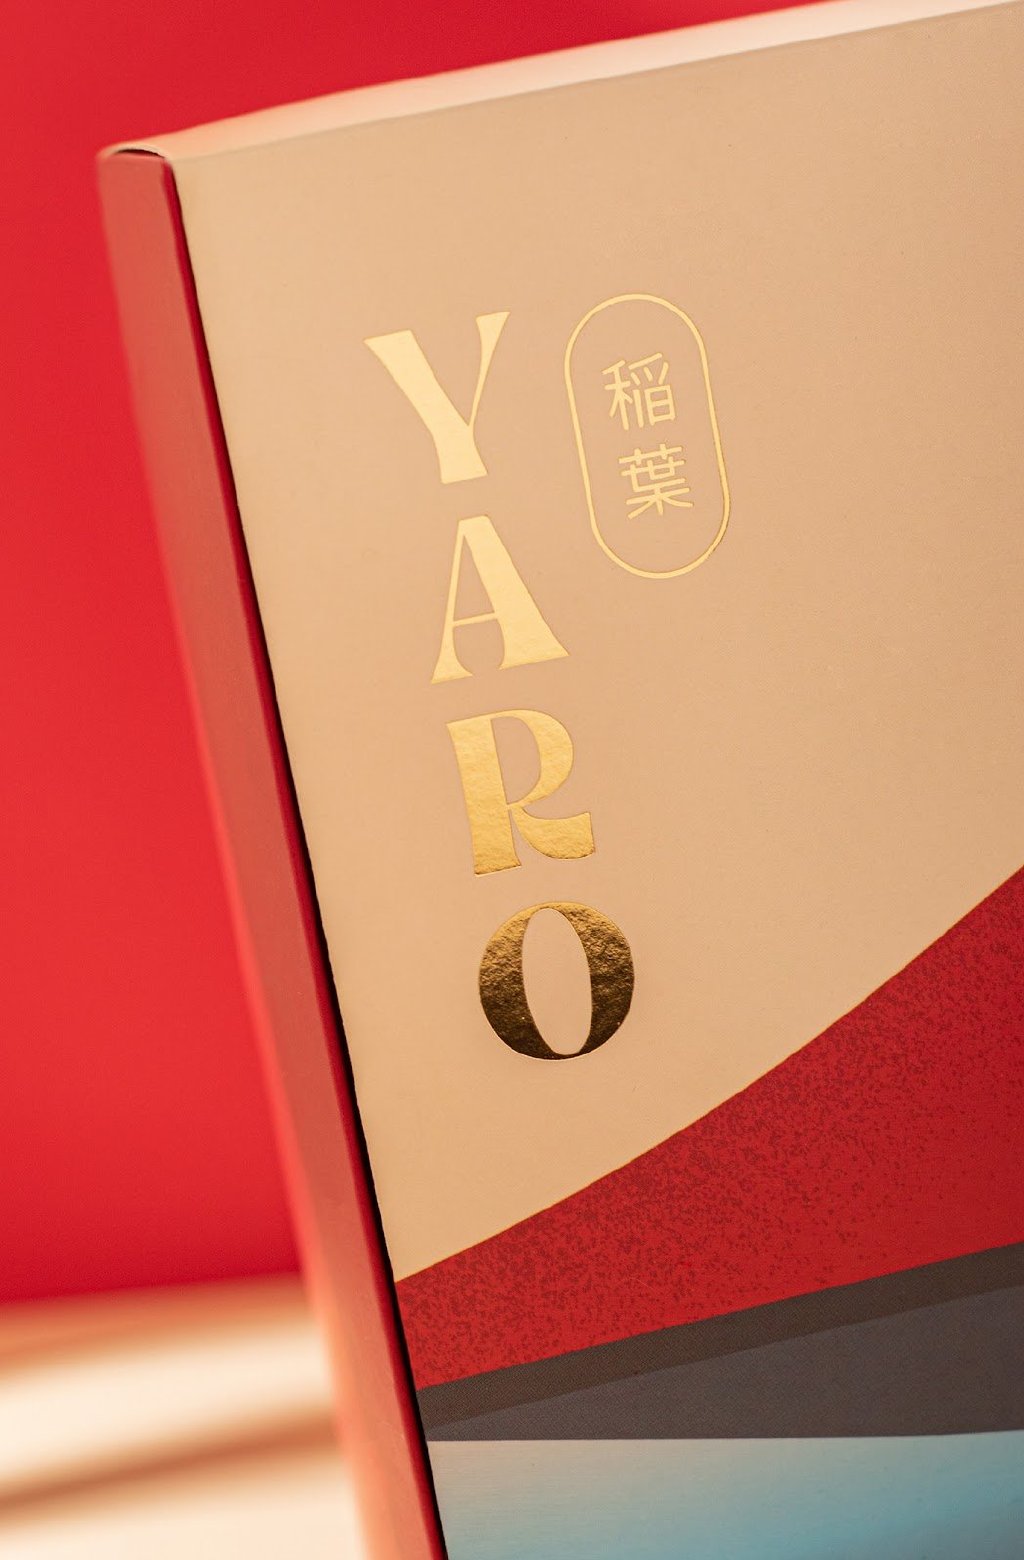 Yaro寿司品牌和包装设计